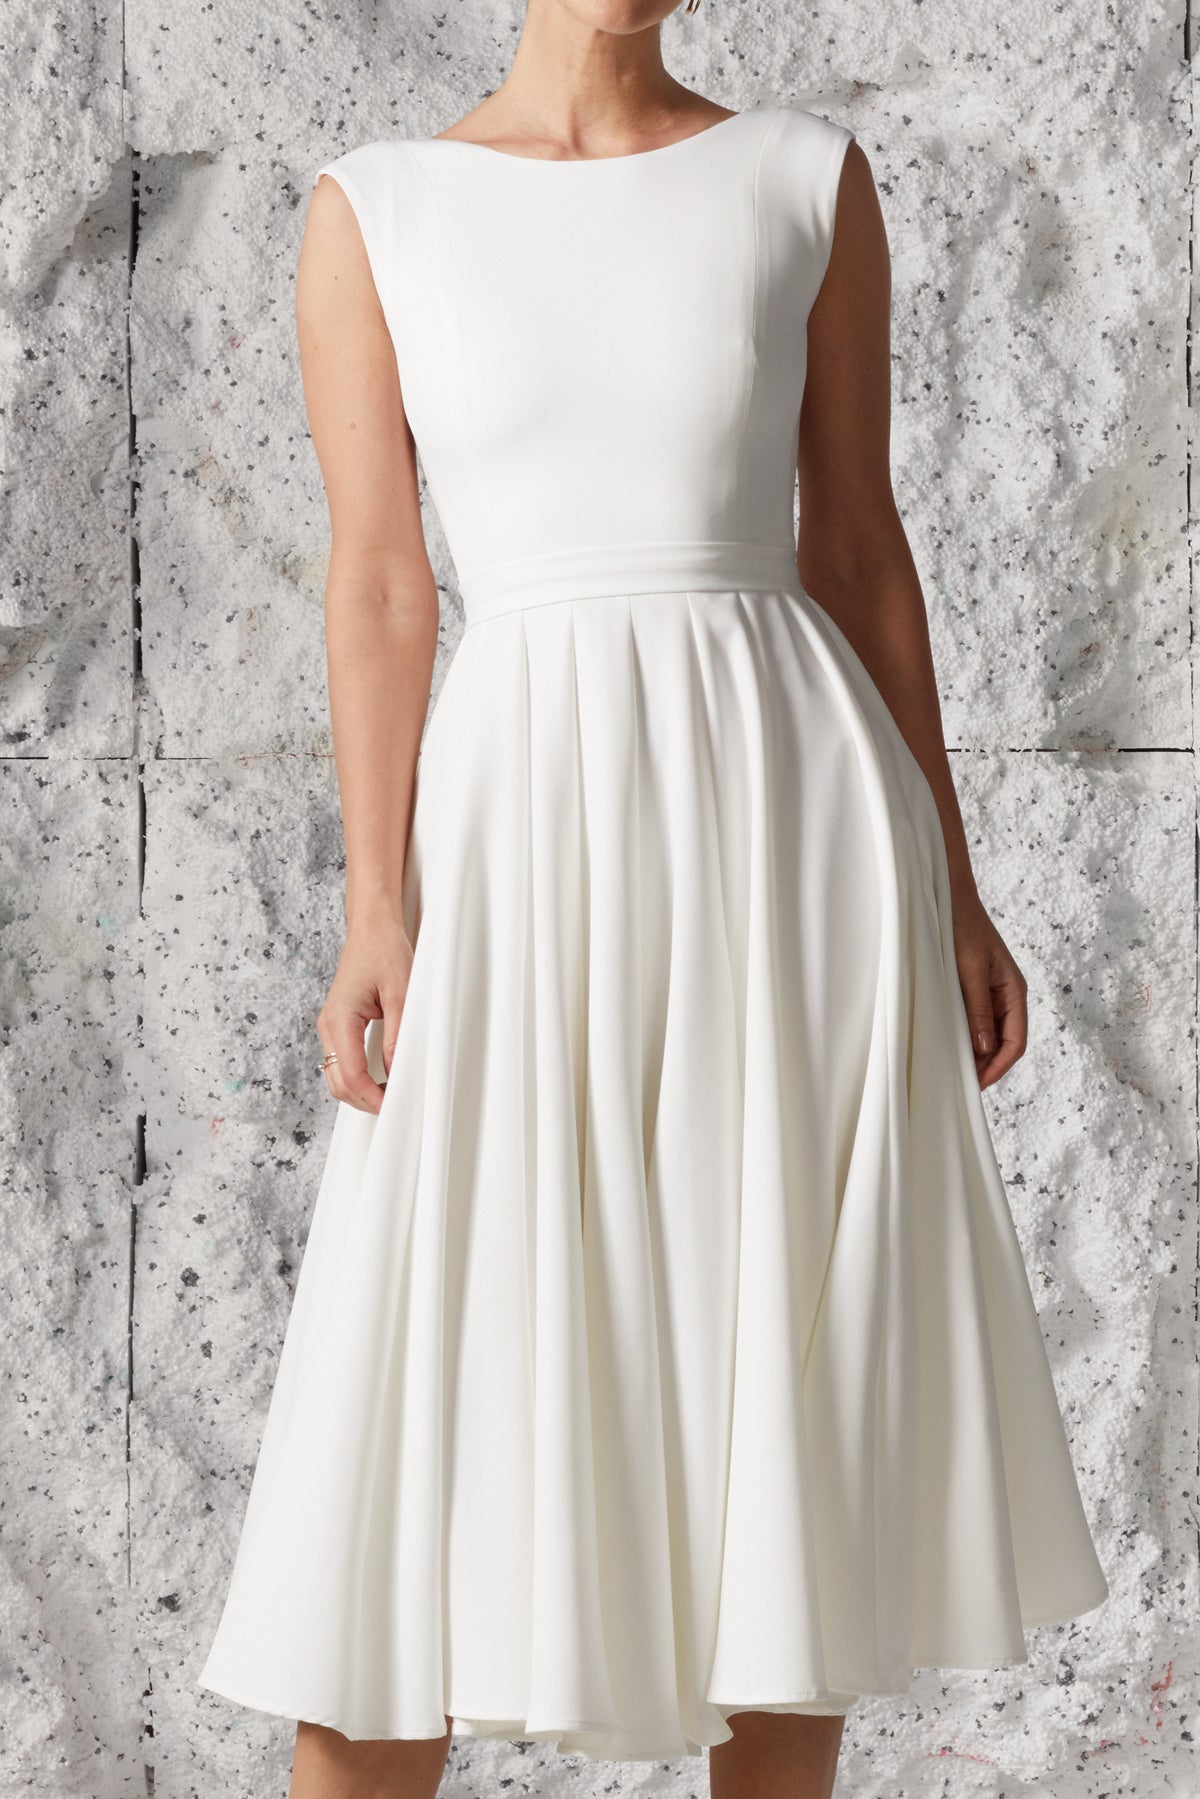 Midi length bridal dress